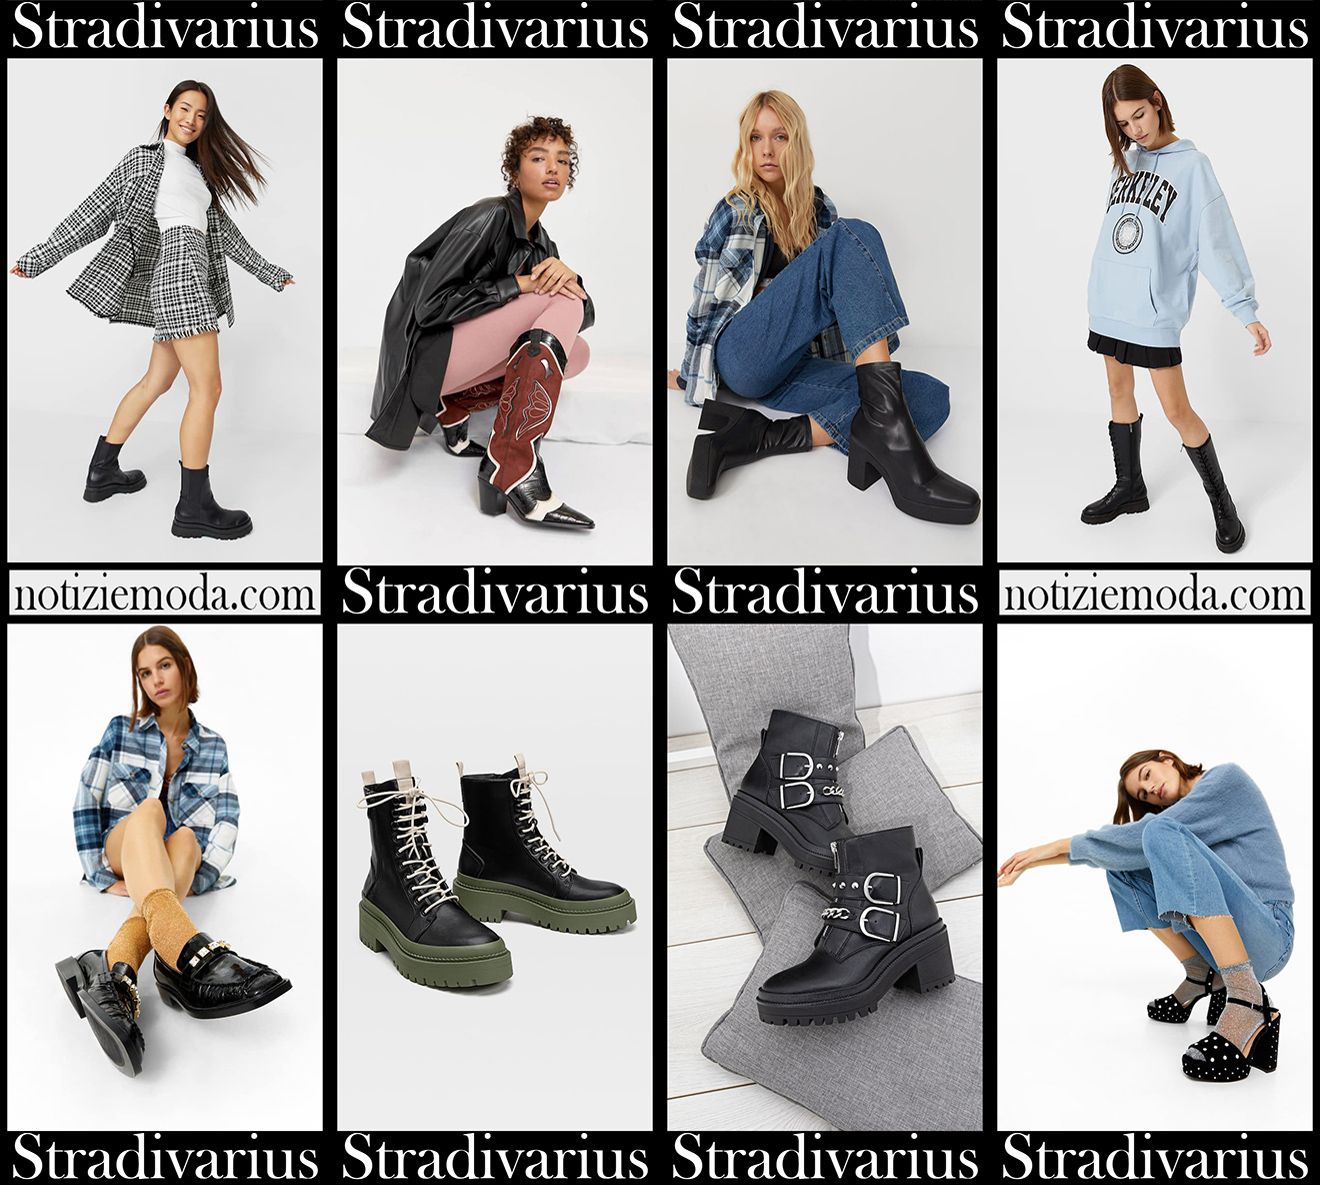 Nuovi arrivi scarpe Stradivarius 2021 calzature donna